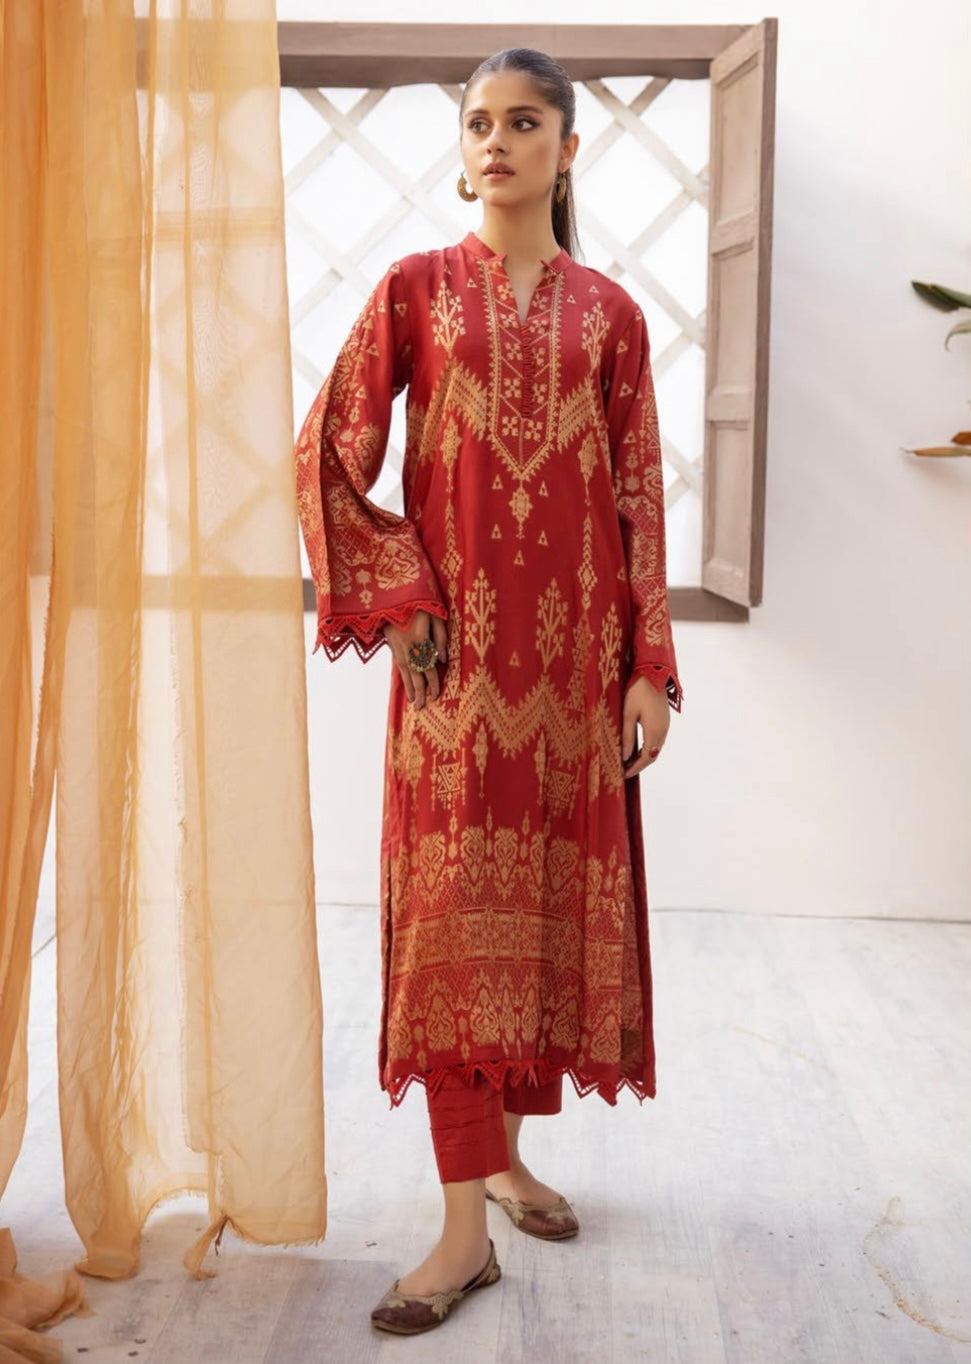  Johra - Pakistani clothes